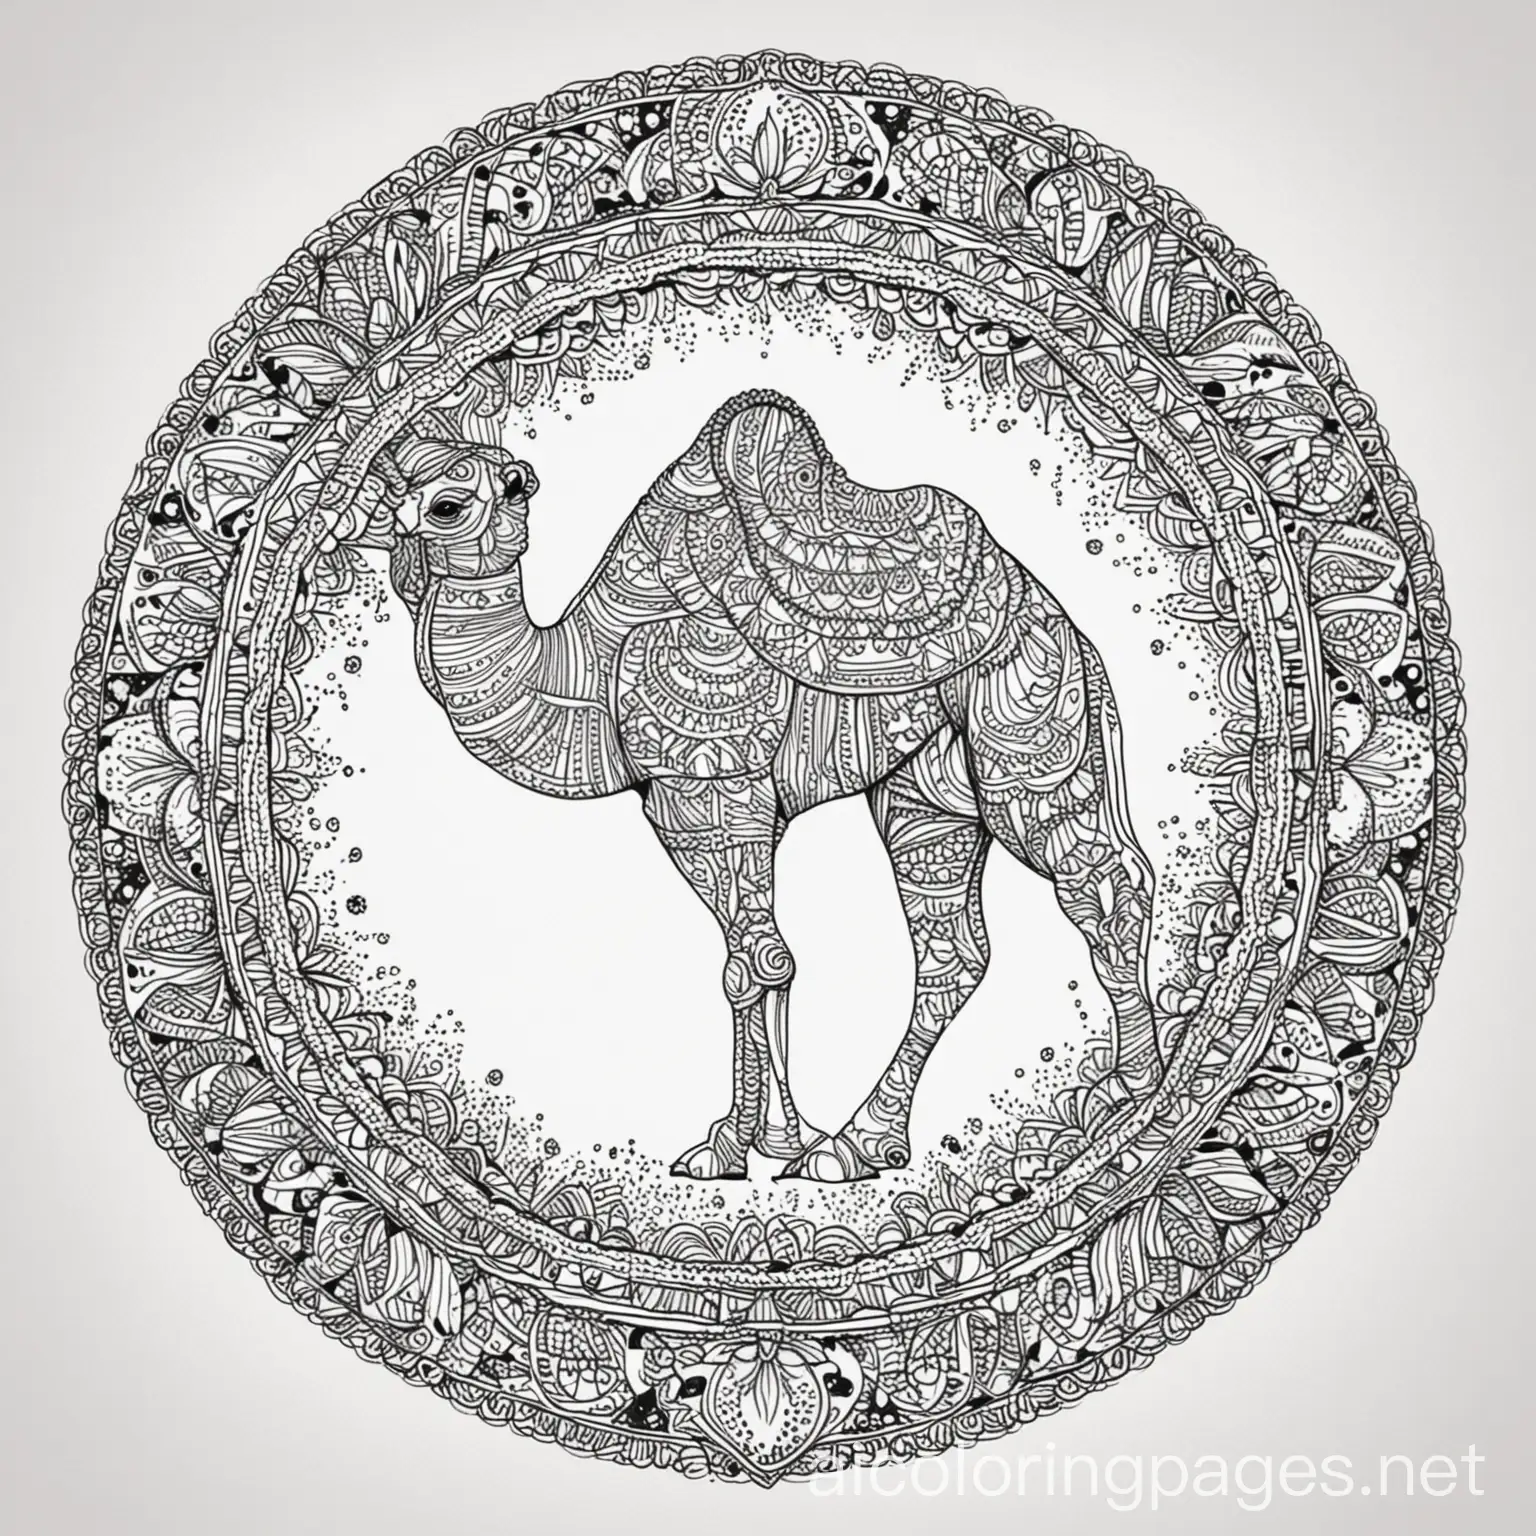 Mandala-Camel-Coloring-Page-with-Vivid-Pattern-Line-Art-Design